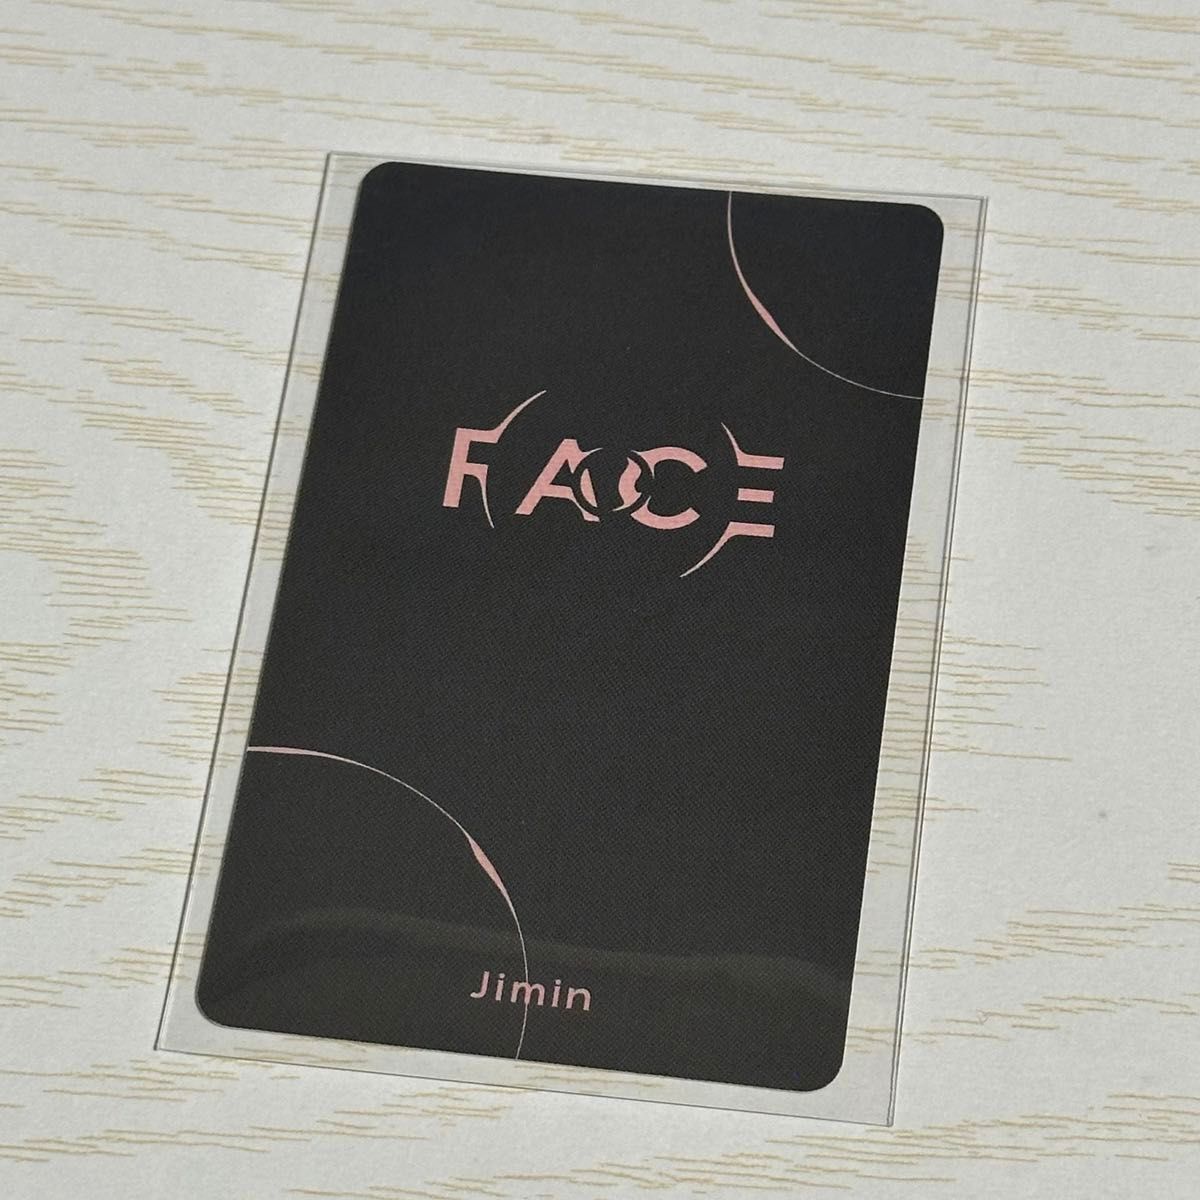 BTS JIMIN FACE JPFC 購入特典 フォトカード ジミン トレカ